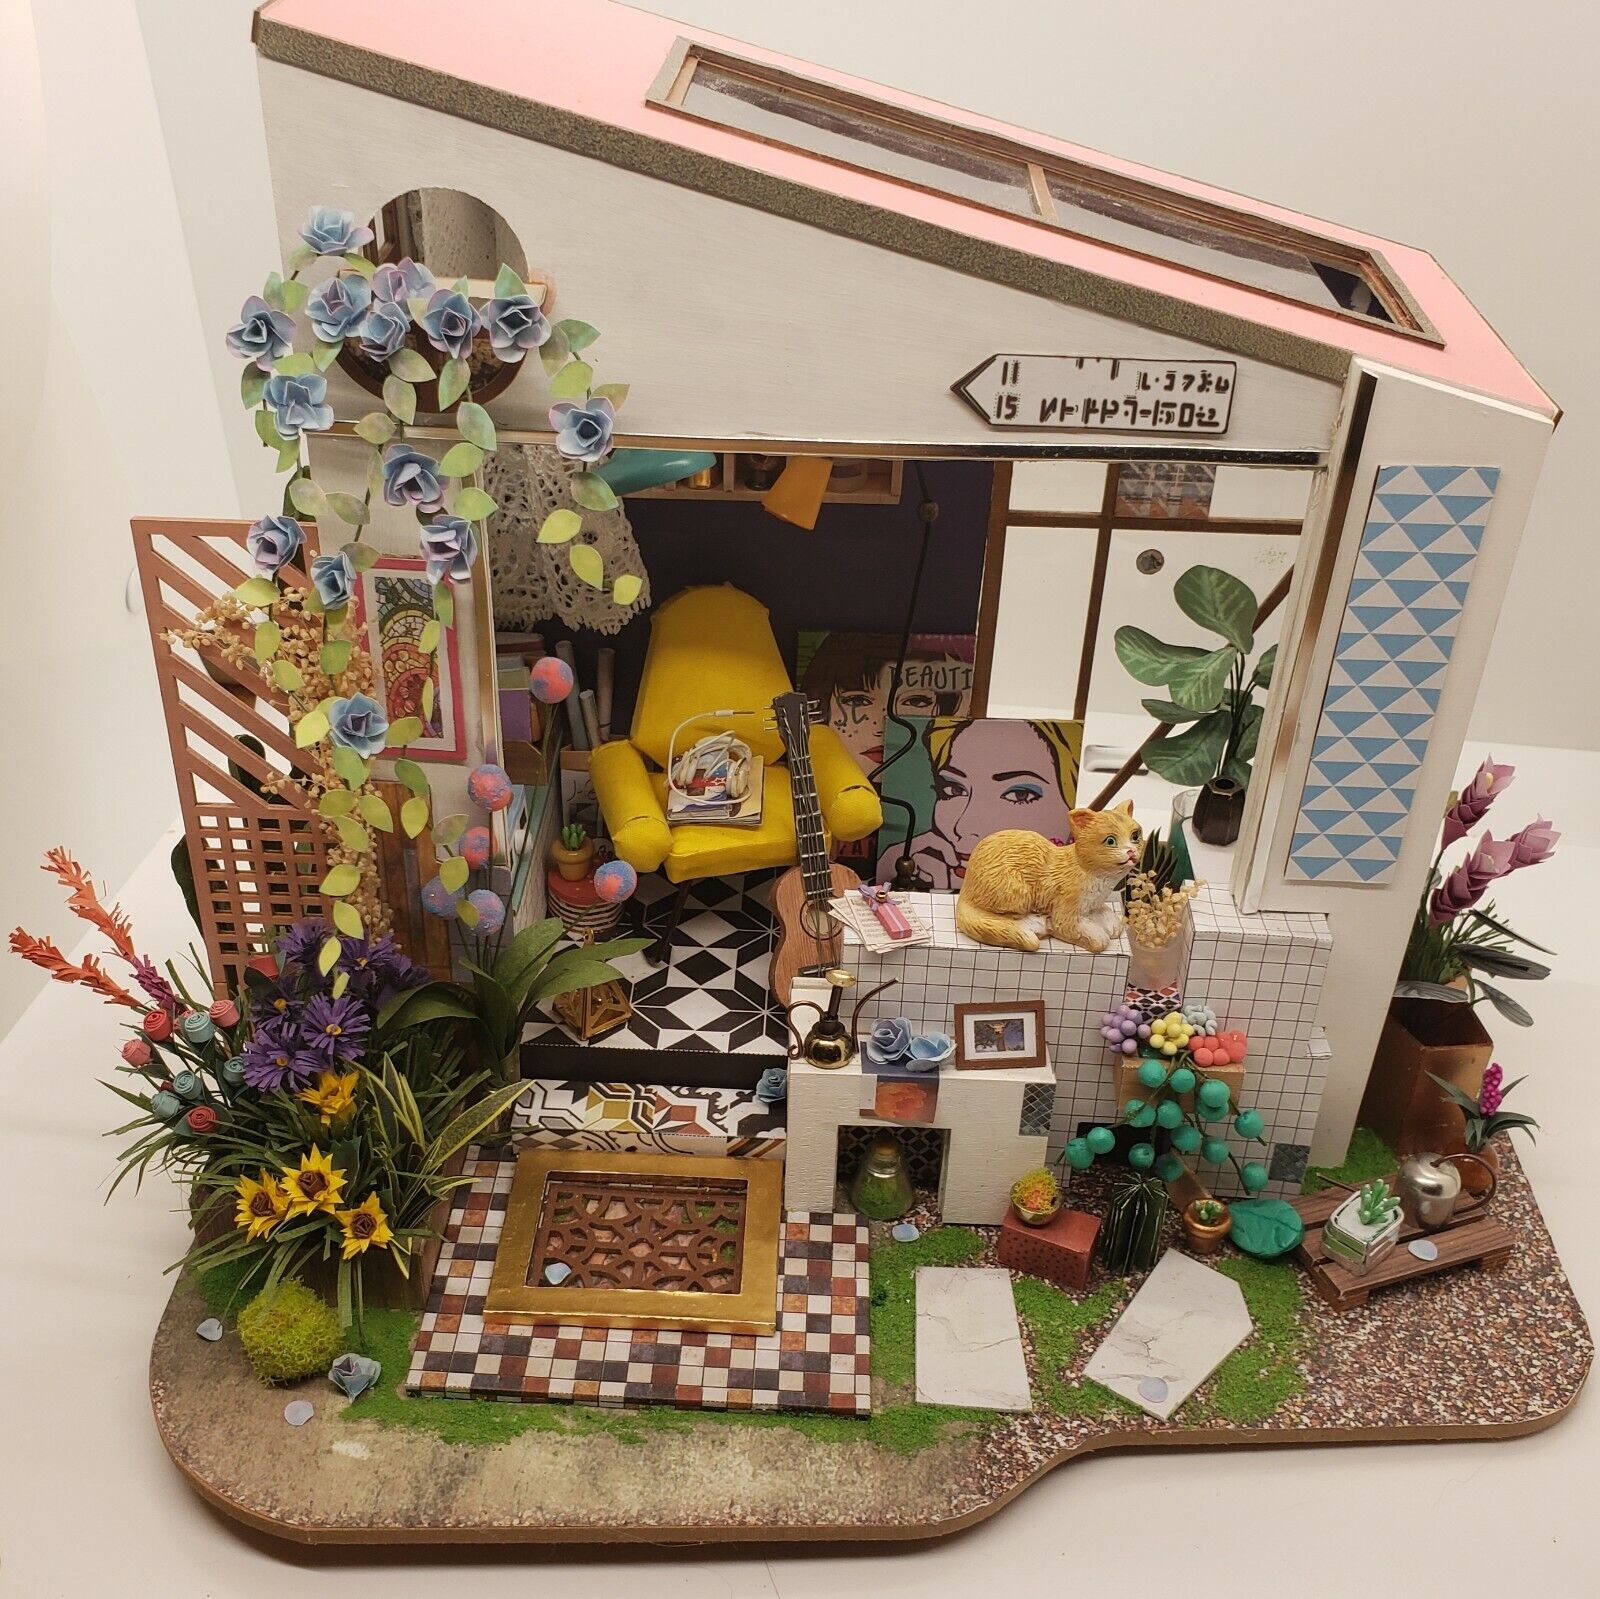 Dollhouse Art Studio - Completed Miniature - Handmade - Garden - Plants - Music